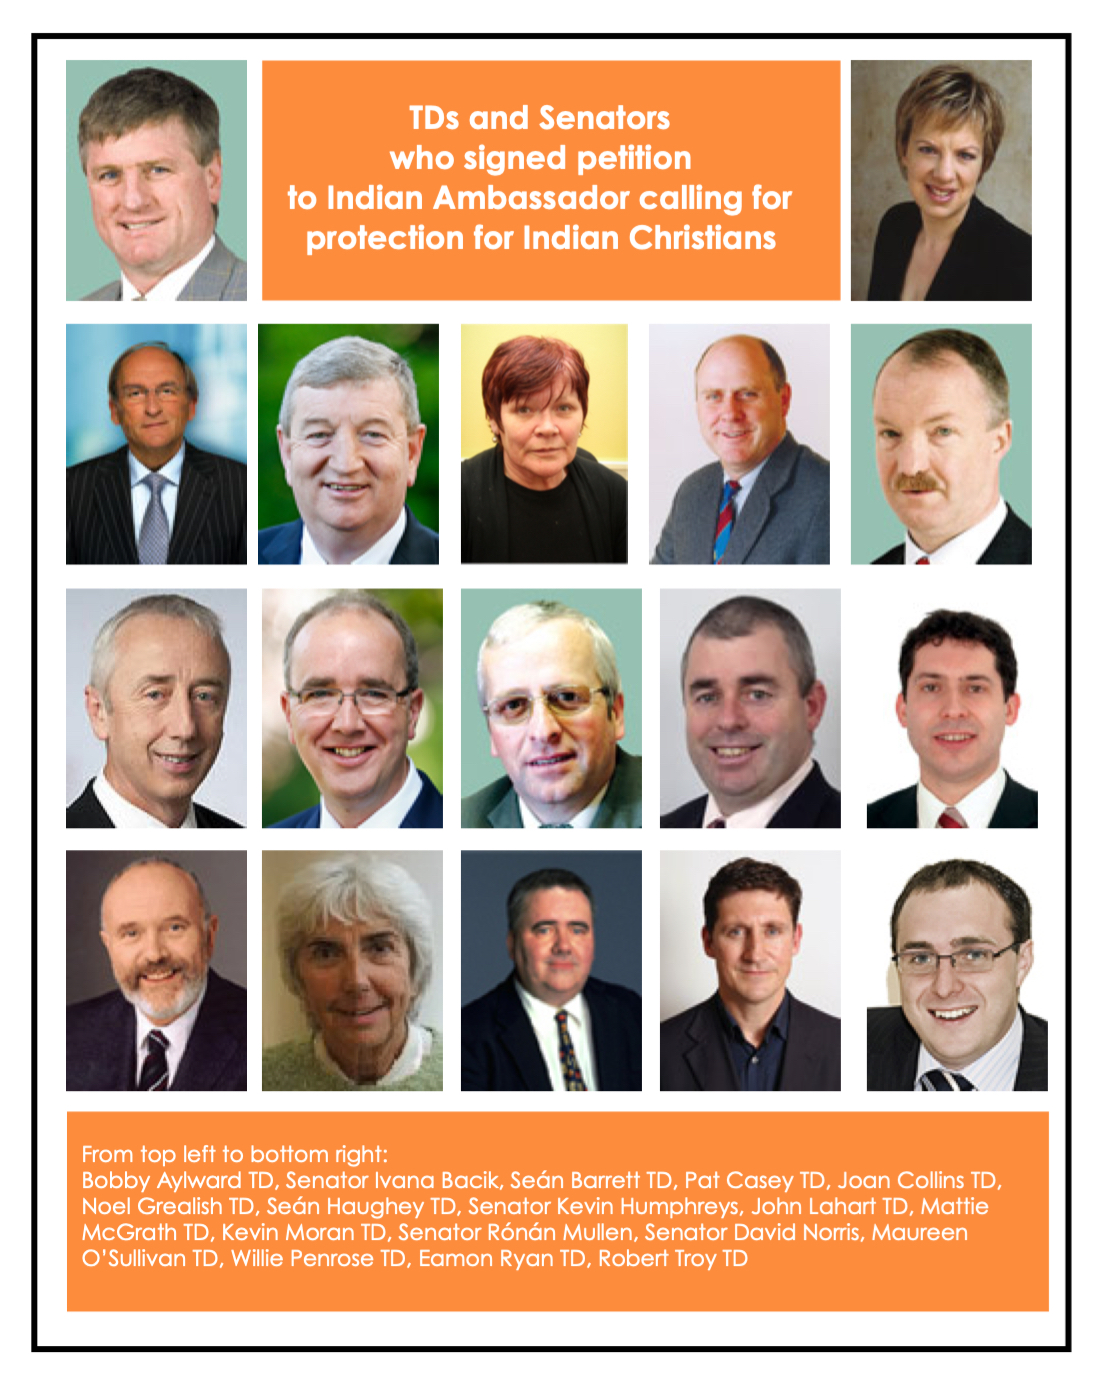 IRELAND: TDs and Senators petition Indian Ambassador to protect Indian Christians